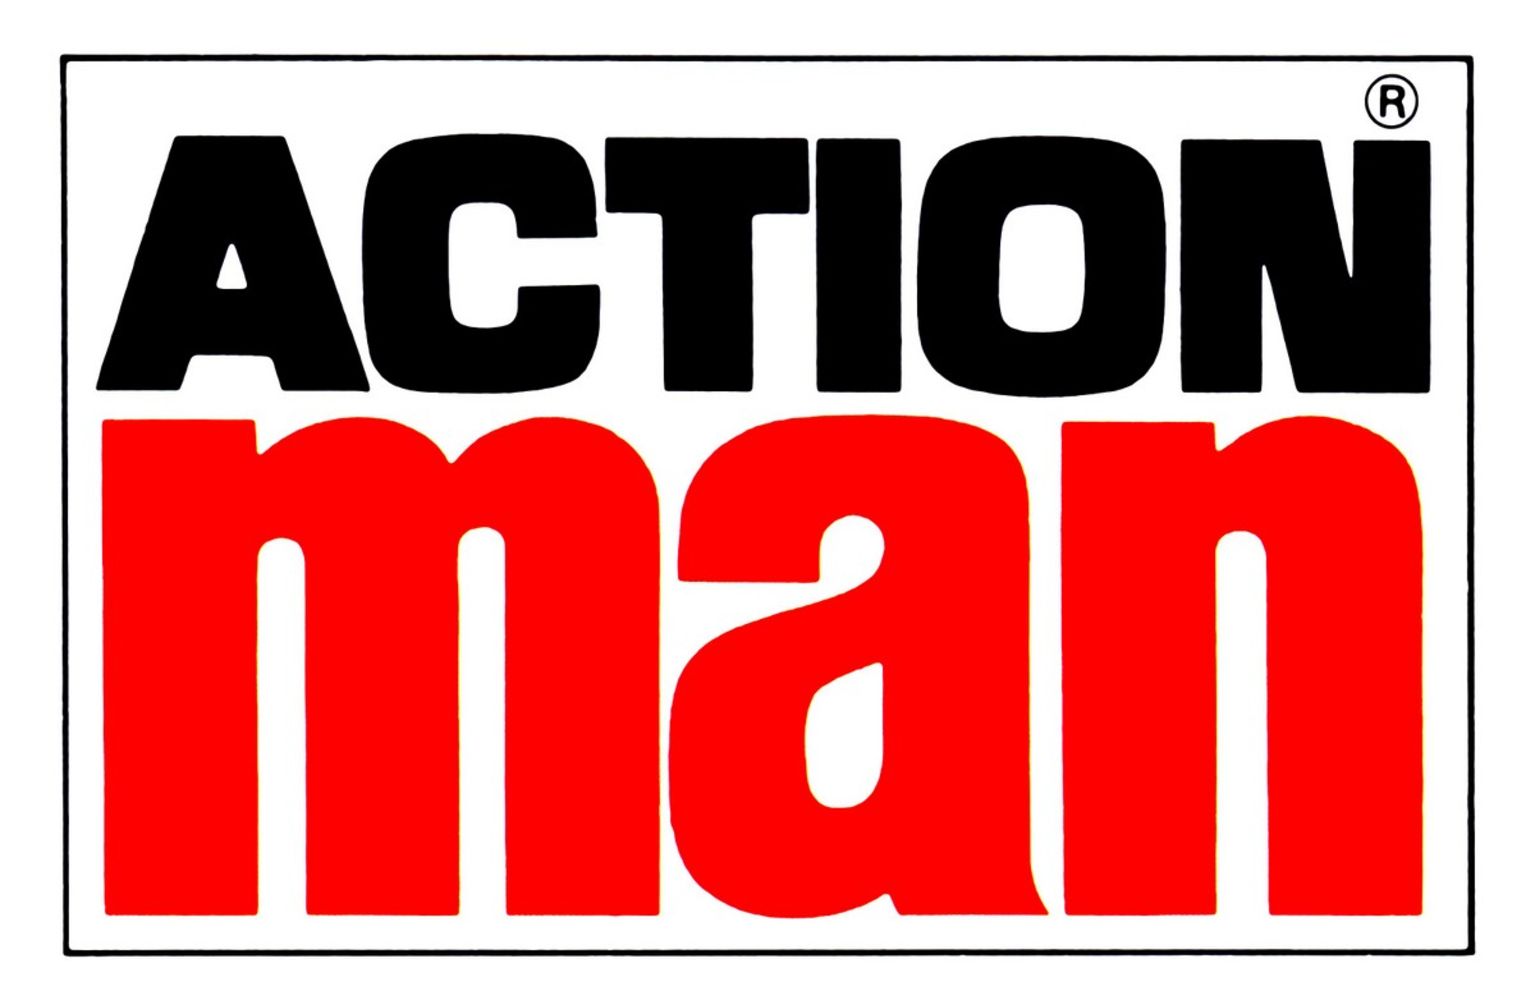 Retro sale of Action Man figures, vehicles, Commodore amiga 500, books, Vinyl records and more